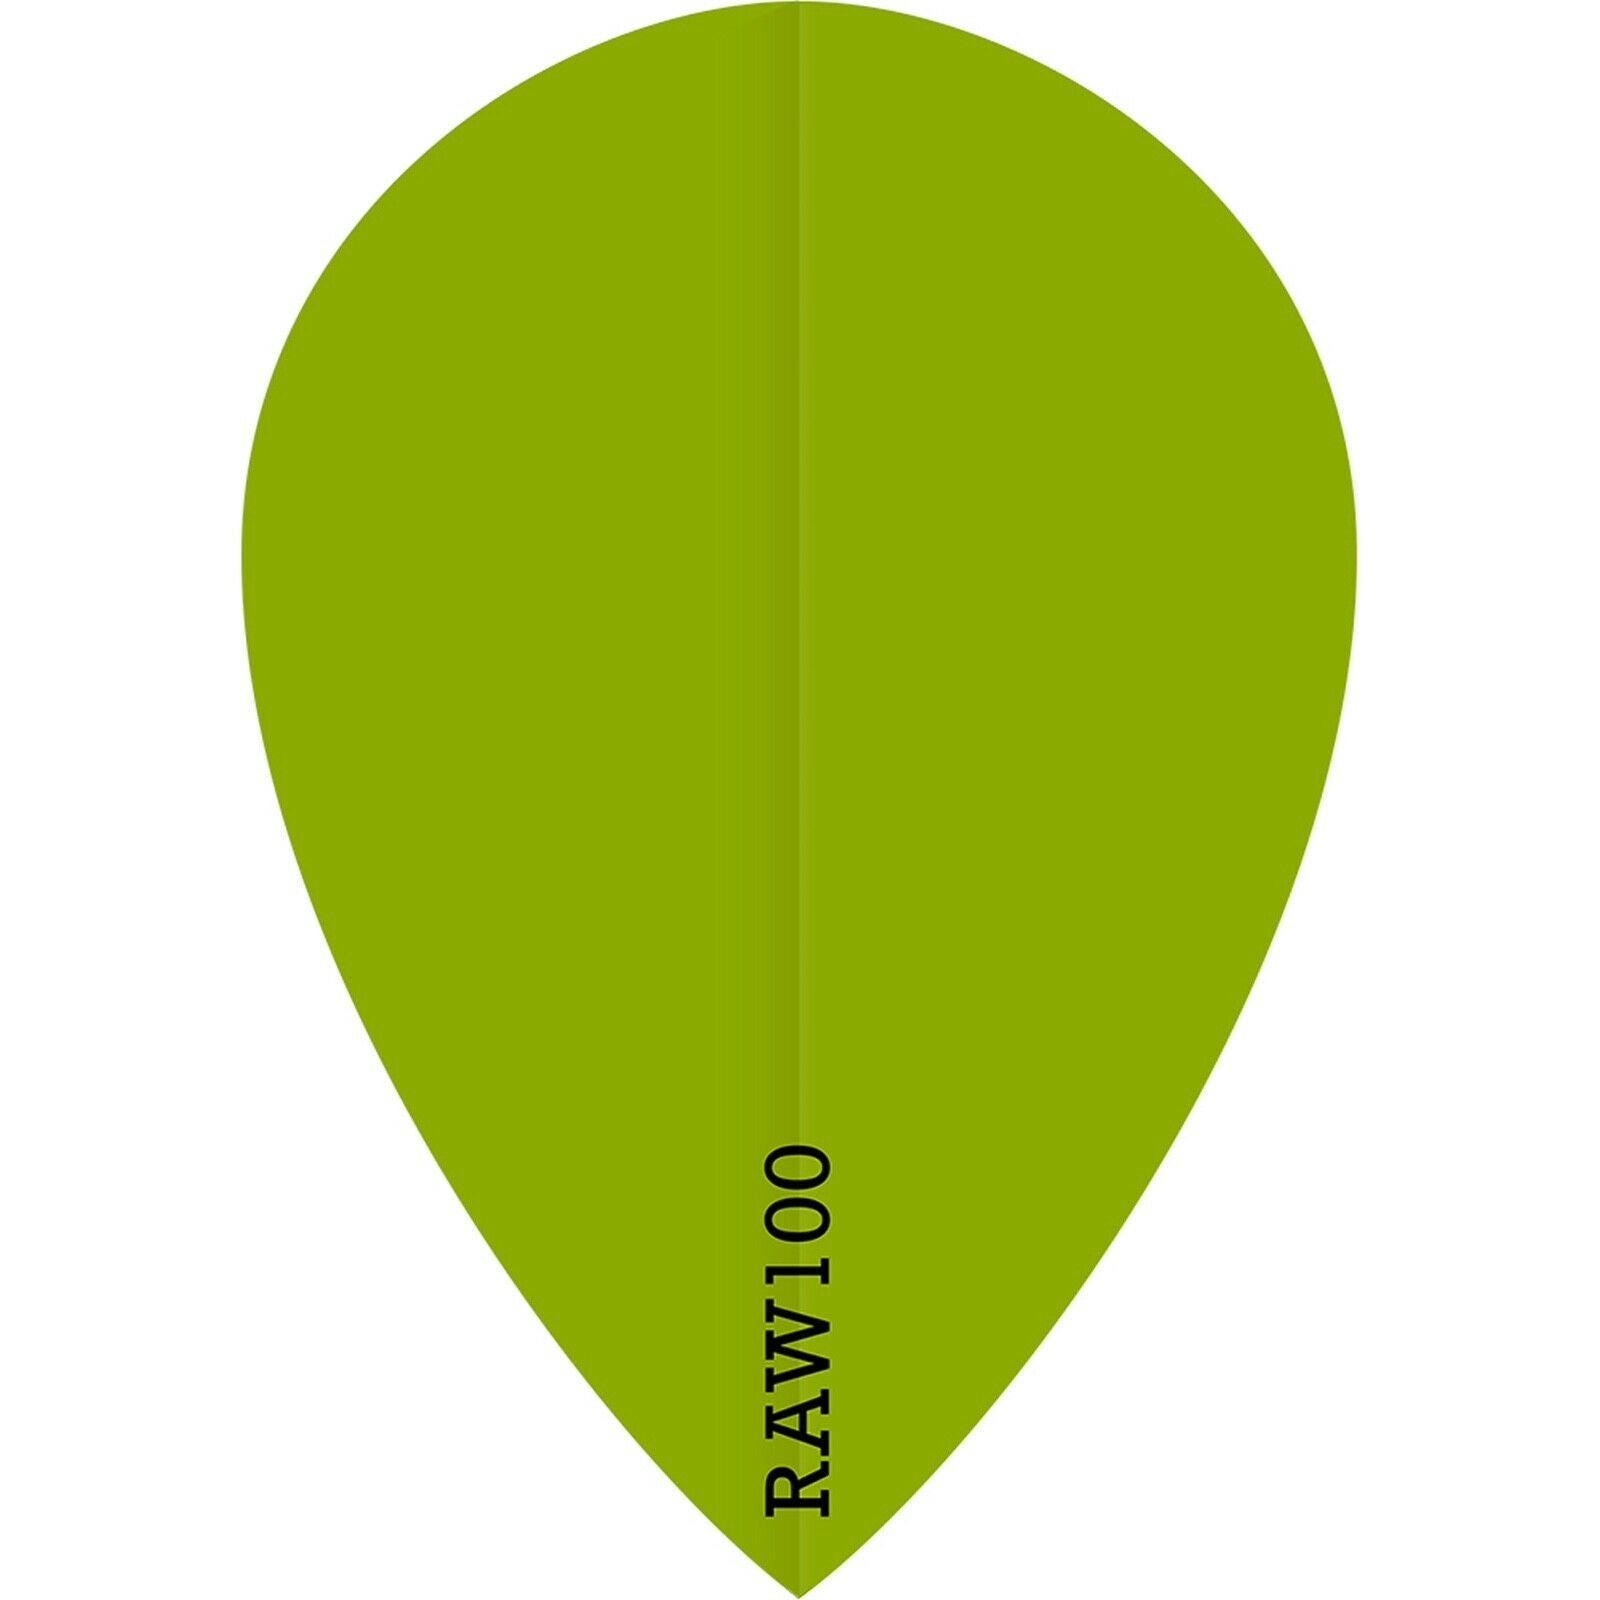 Raw 100 Plain Flights - Pear - 100 micron - Green